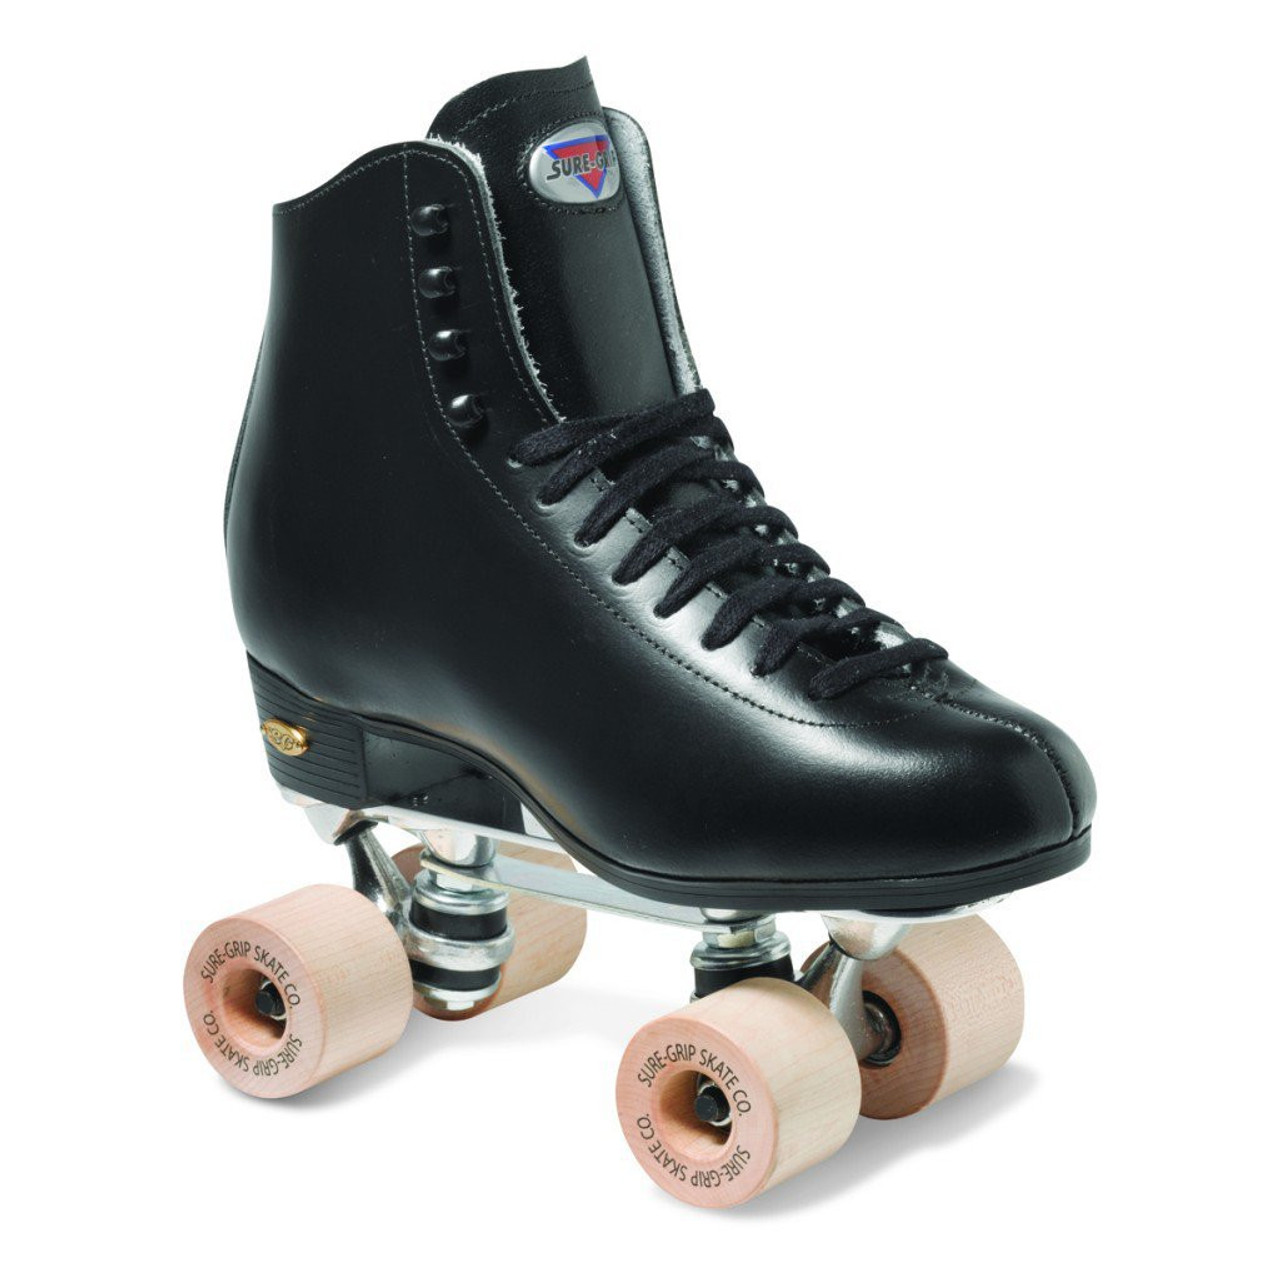 Sure-Grip Quad Roller Skates - Los Angeles- Size 9 Mens/ 10 Ladies